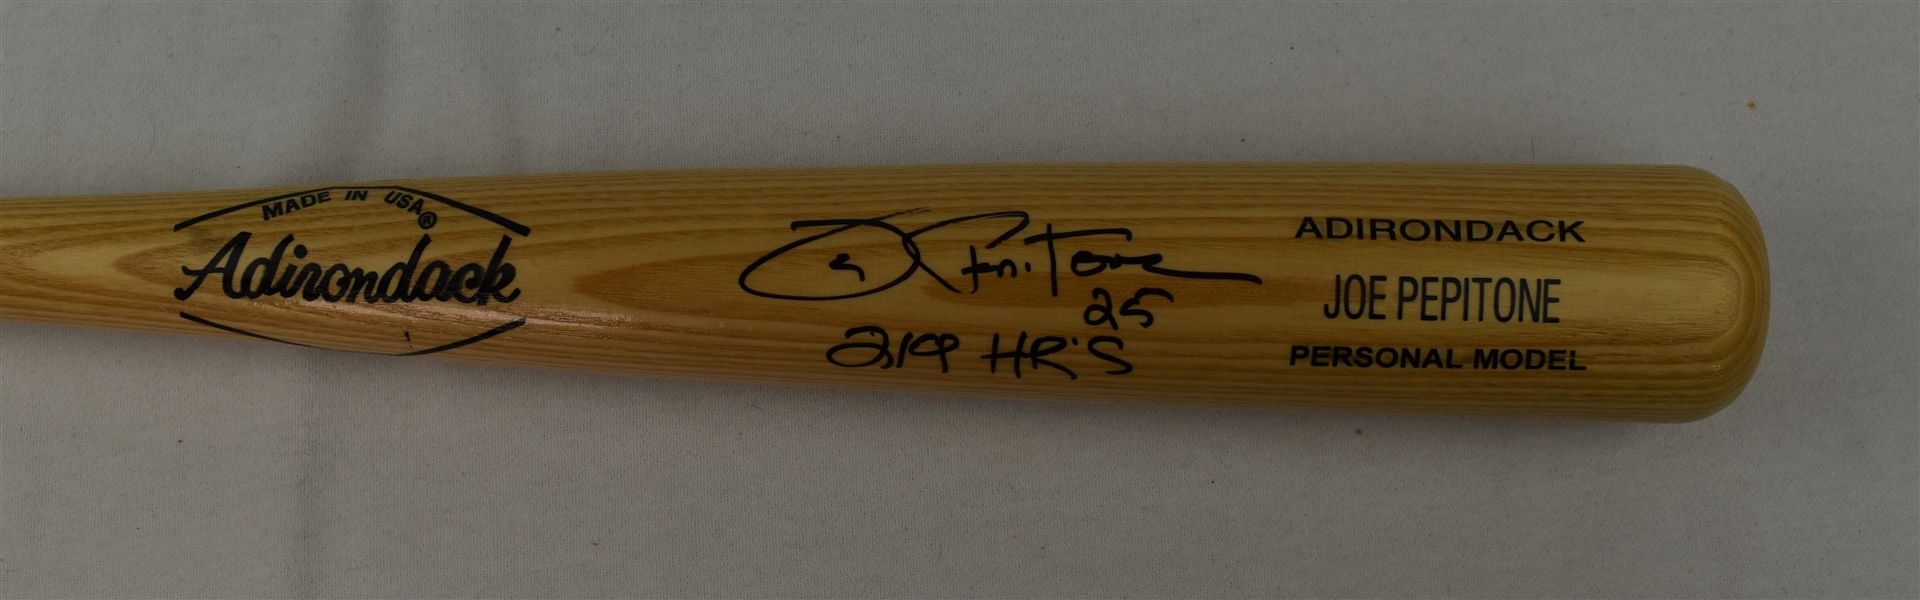 Joe Pepitone Autographed & Inscribed Bat PSA/DNA